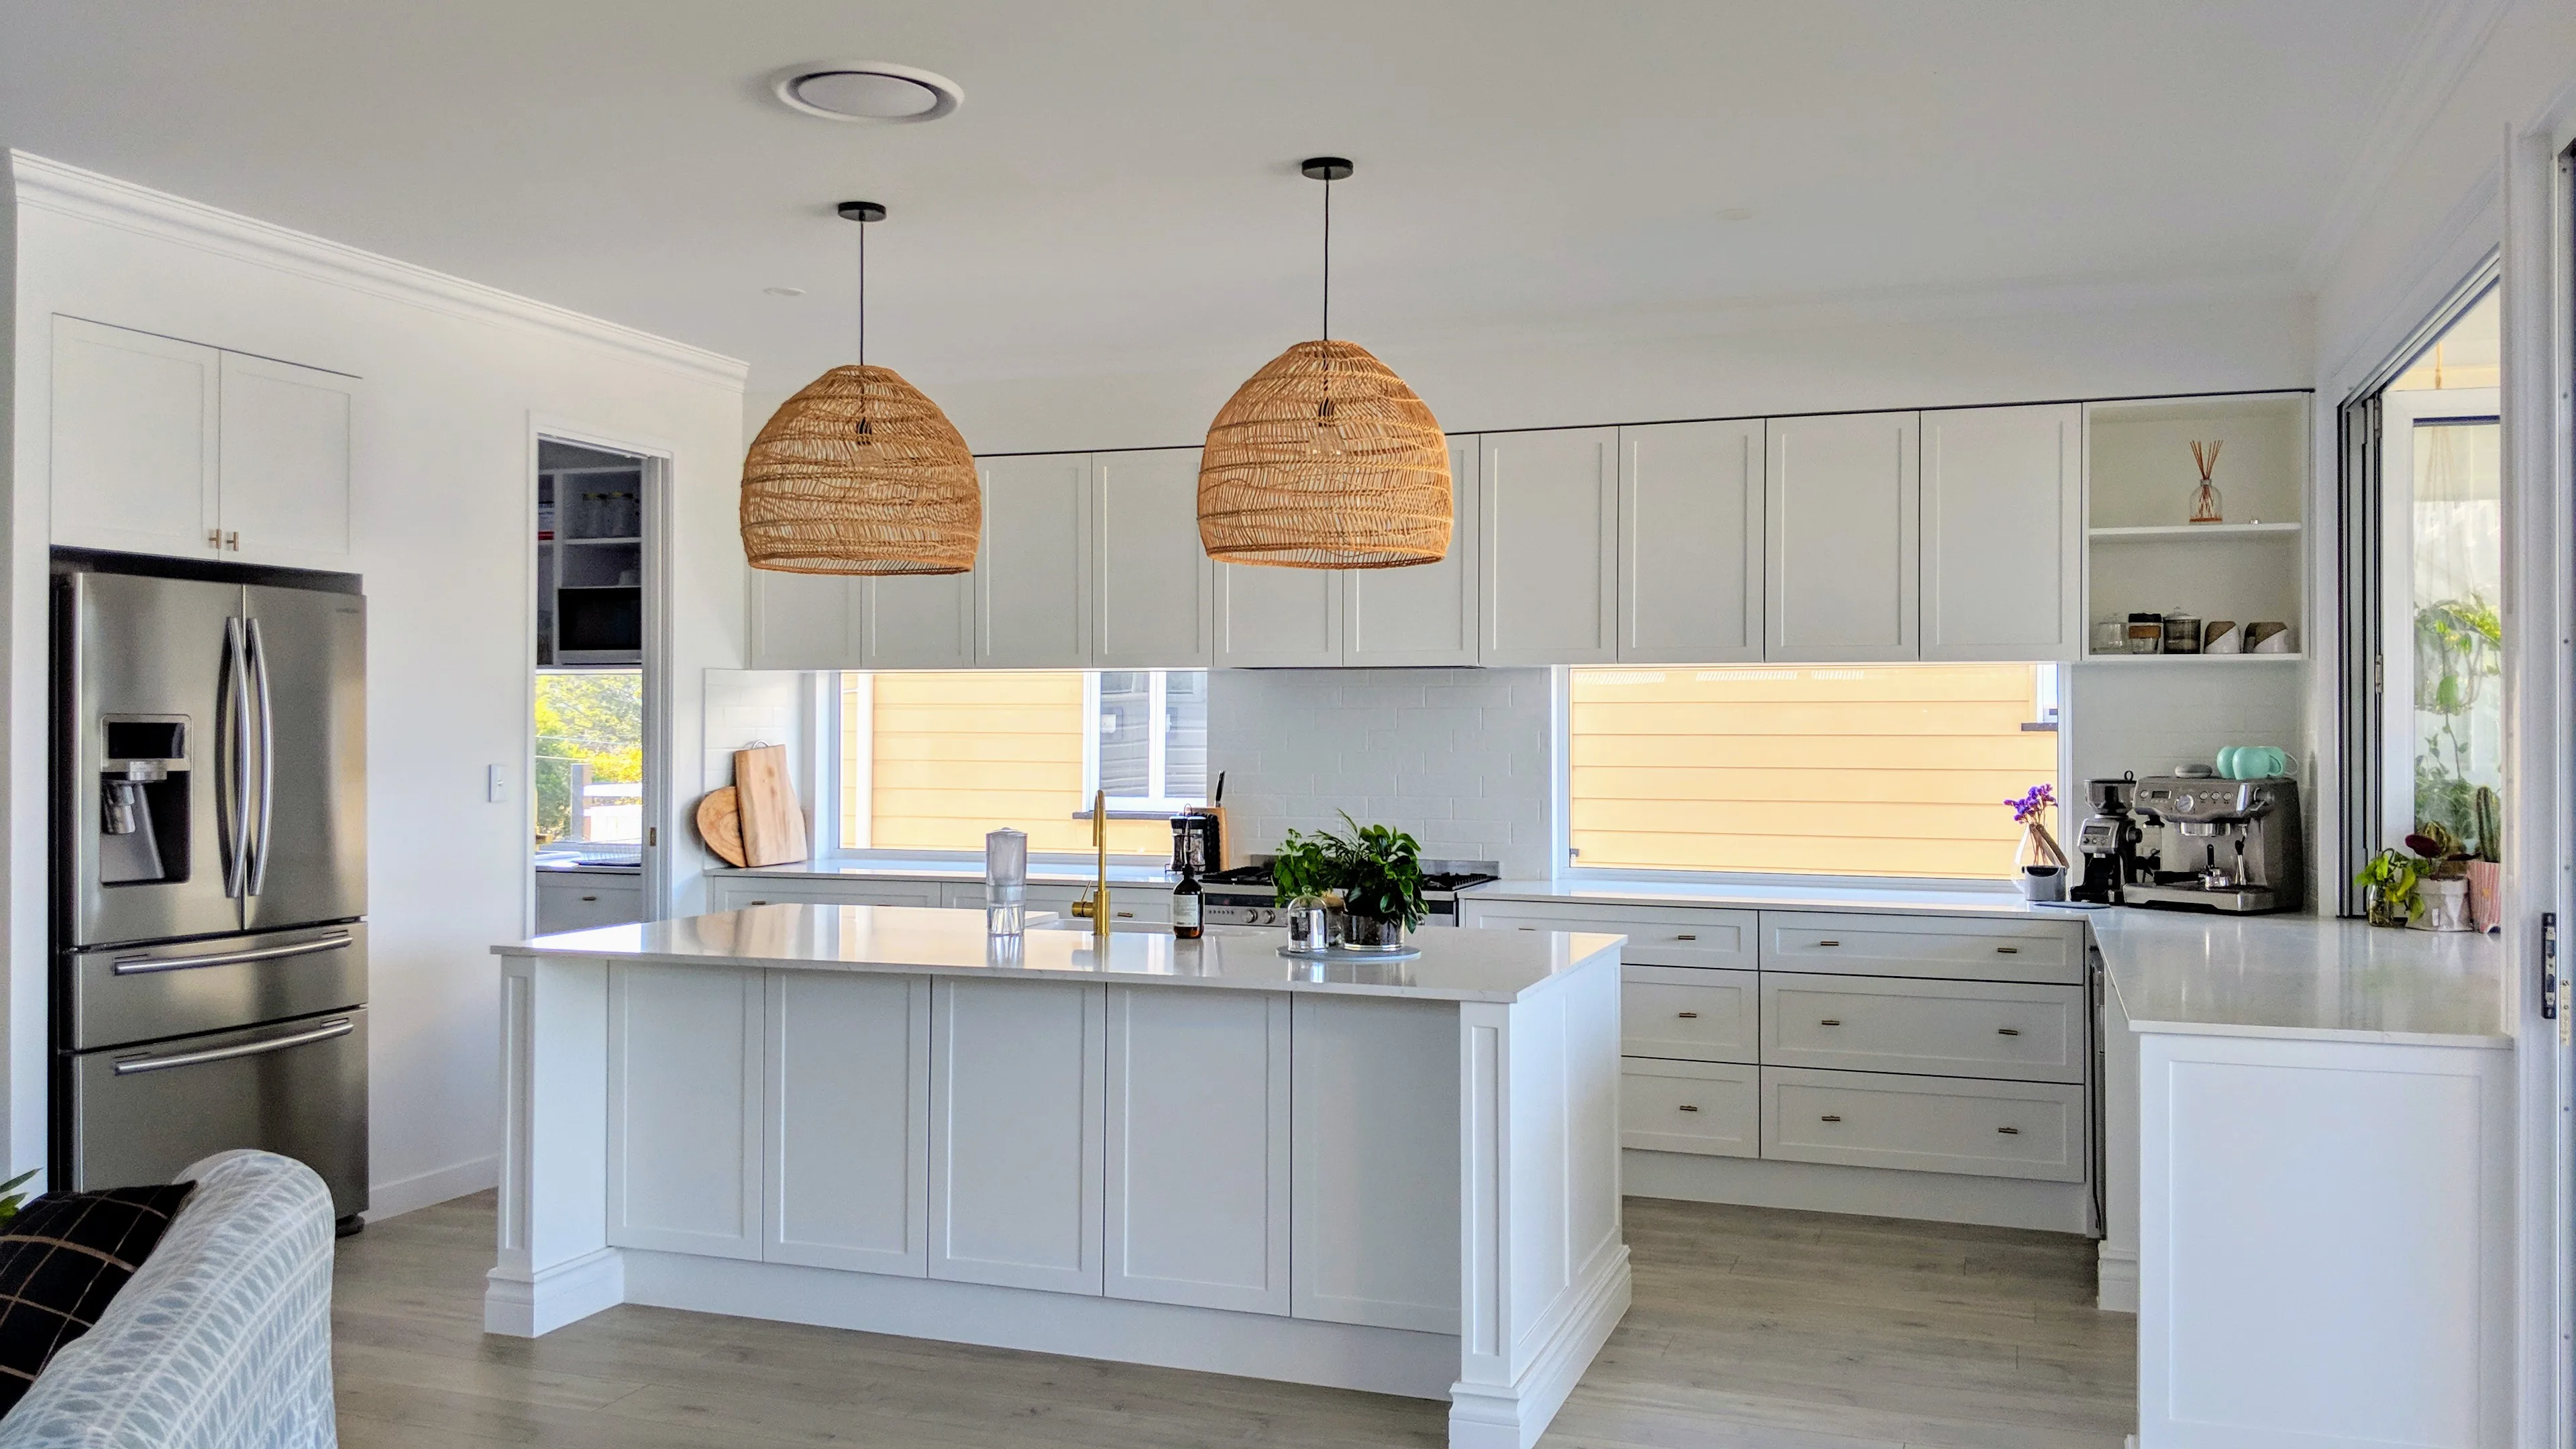 2020 Vermonhouse White Lacquer Shaker Mdf Kitchen Cabinet For Villas In